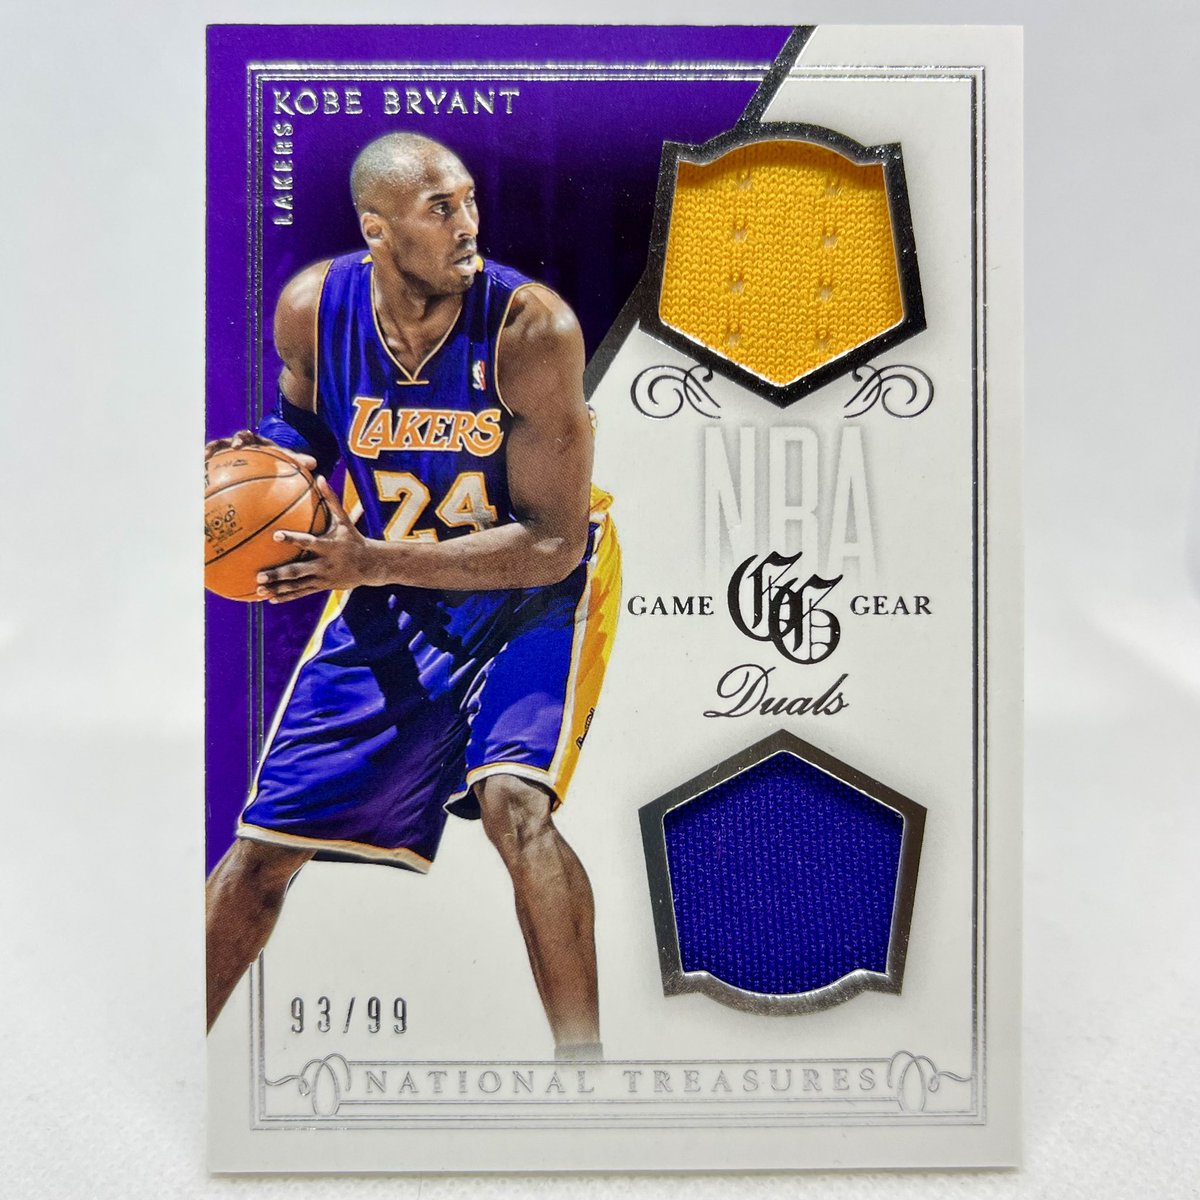 #KobePCcards of the day

2013-14 Panini National Treasures Game Gear Duals #’d to /99

#Lakers #KobeBryant #PaniniAmerica #BasketballCards #PCShowcase #Kobe